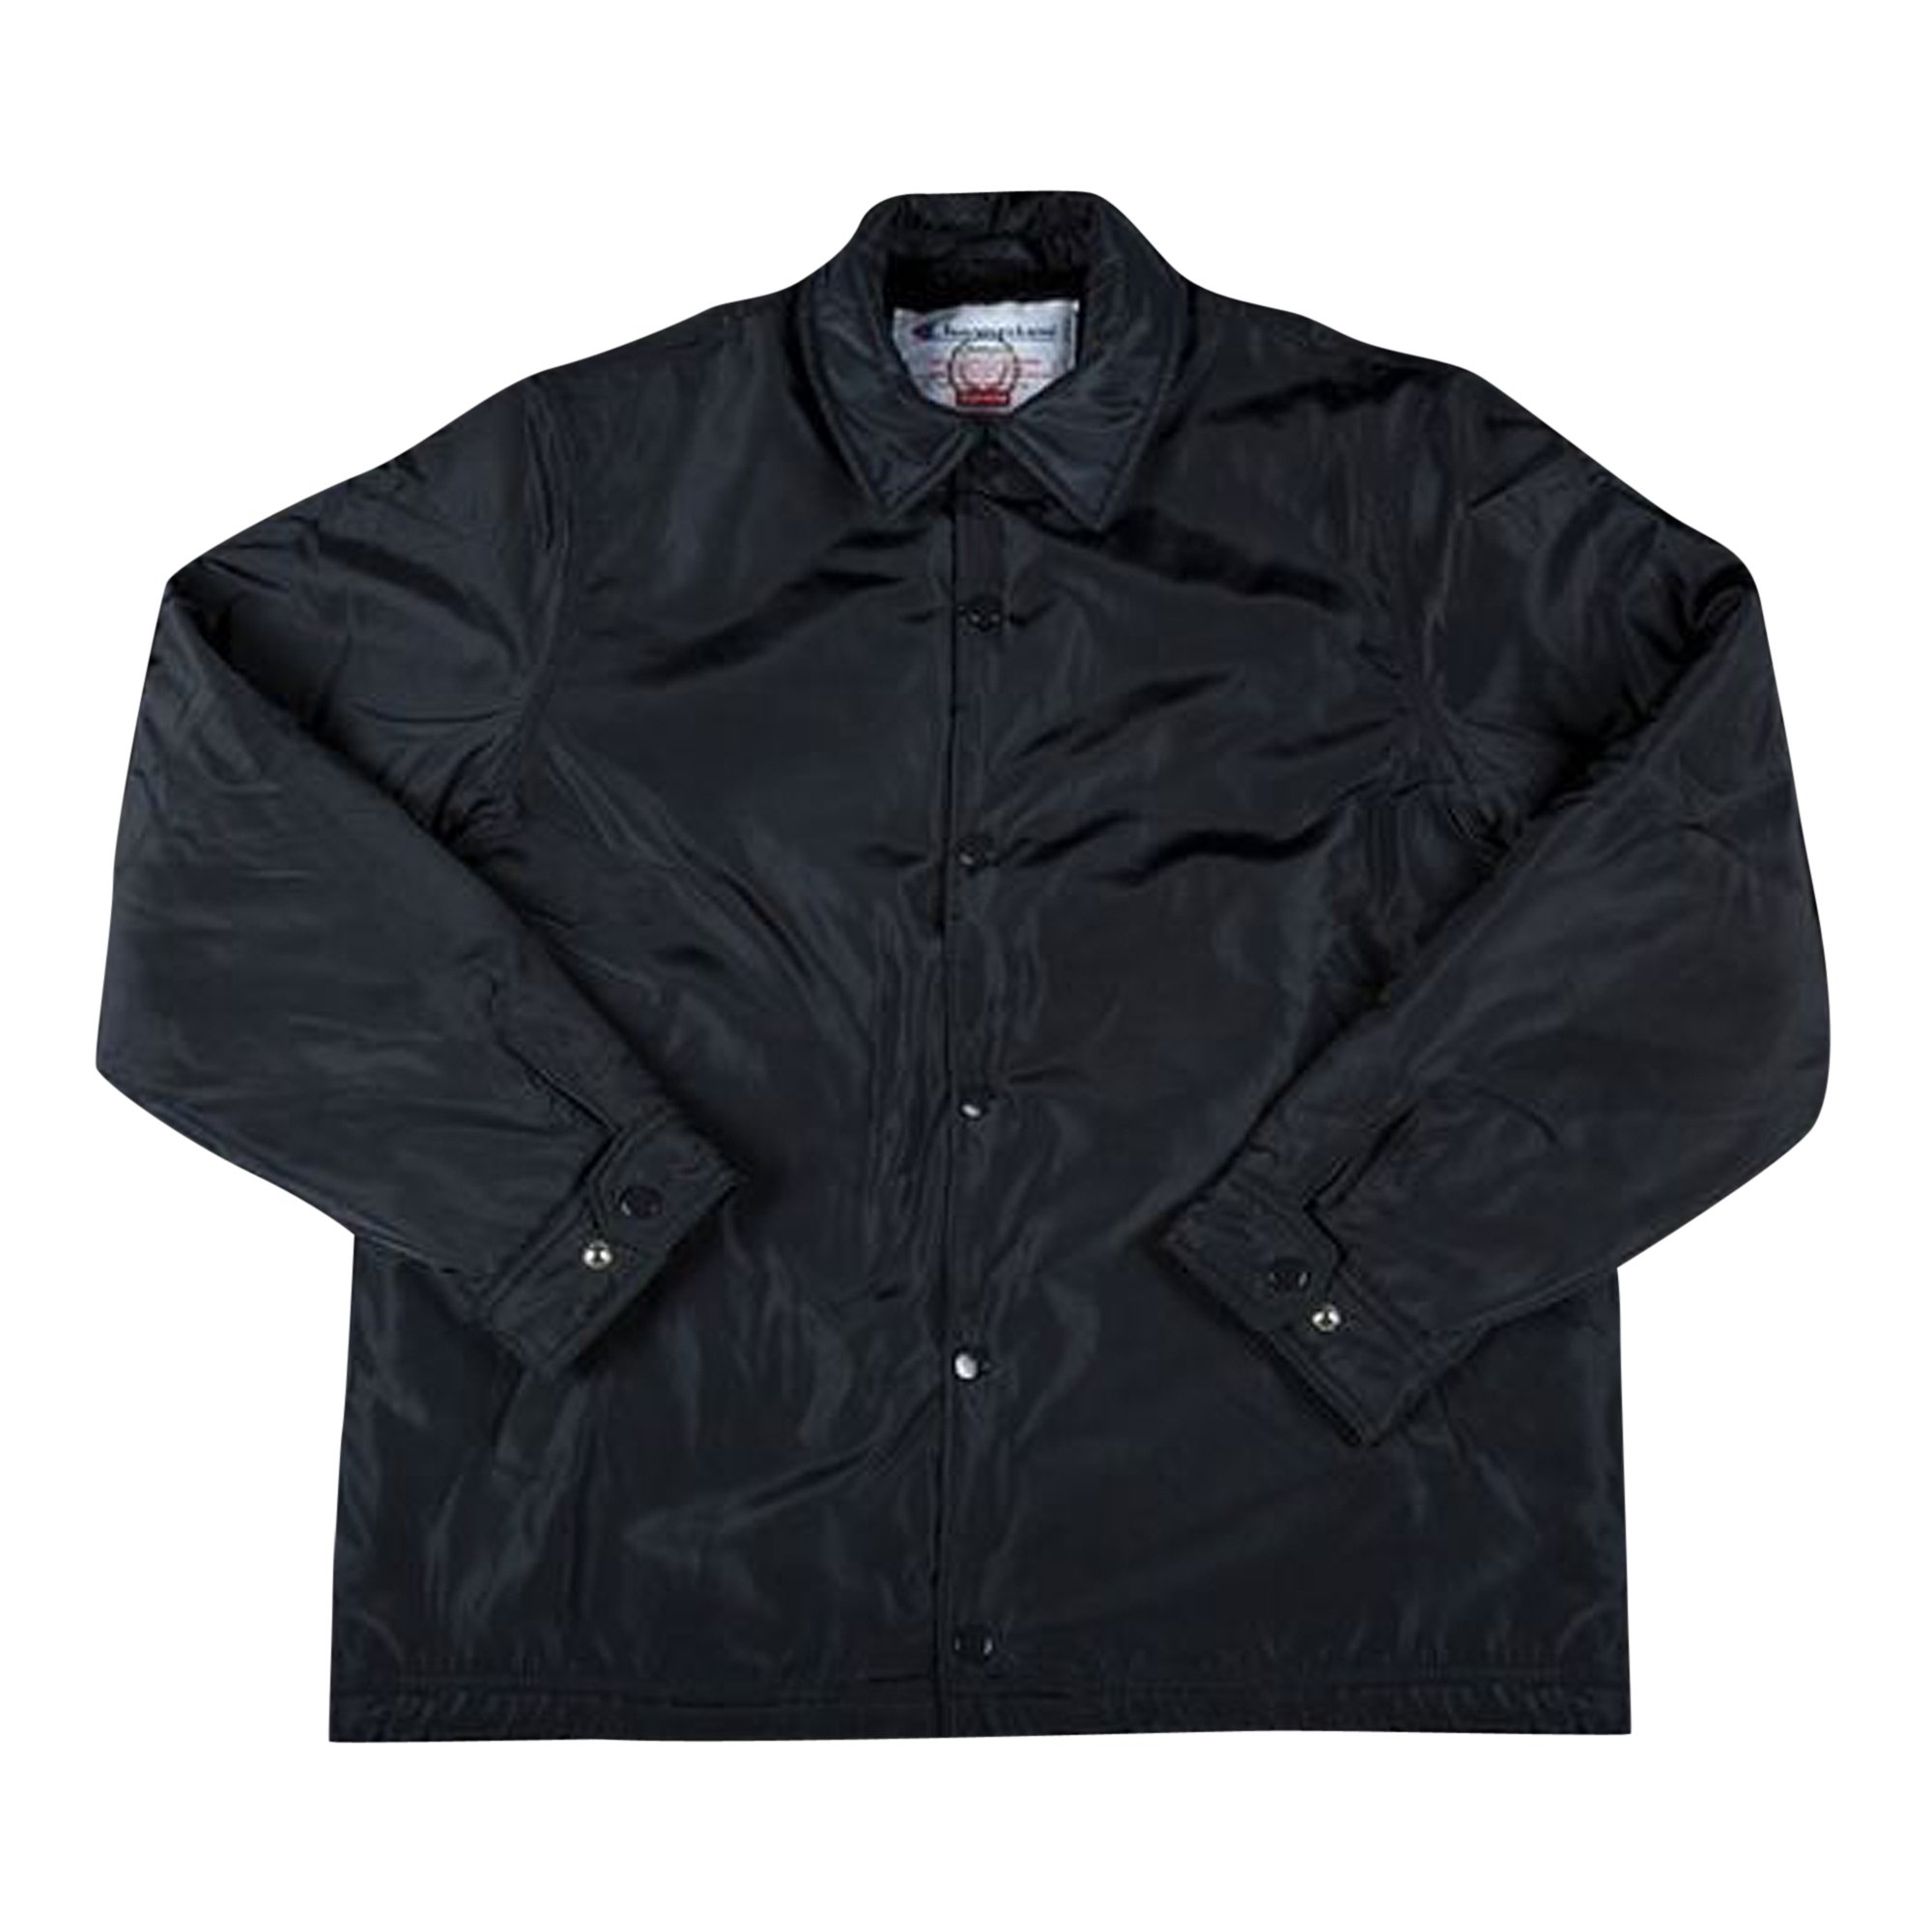 Buy Supreme x Champion Label Coaches Jacket 'Black' - FW18J74